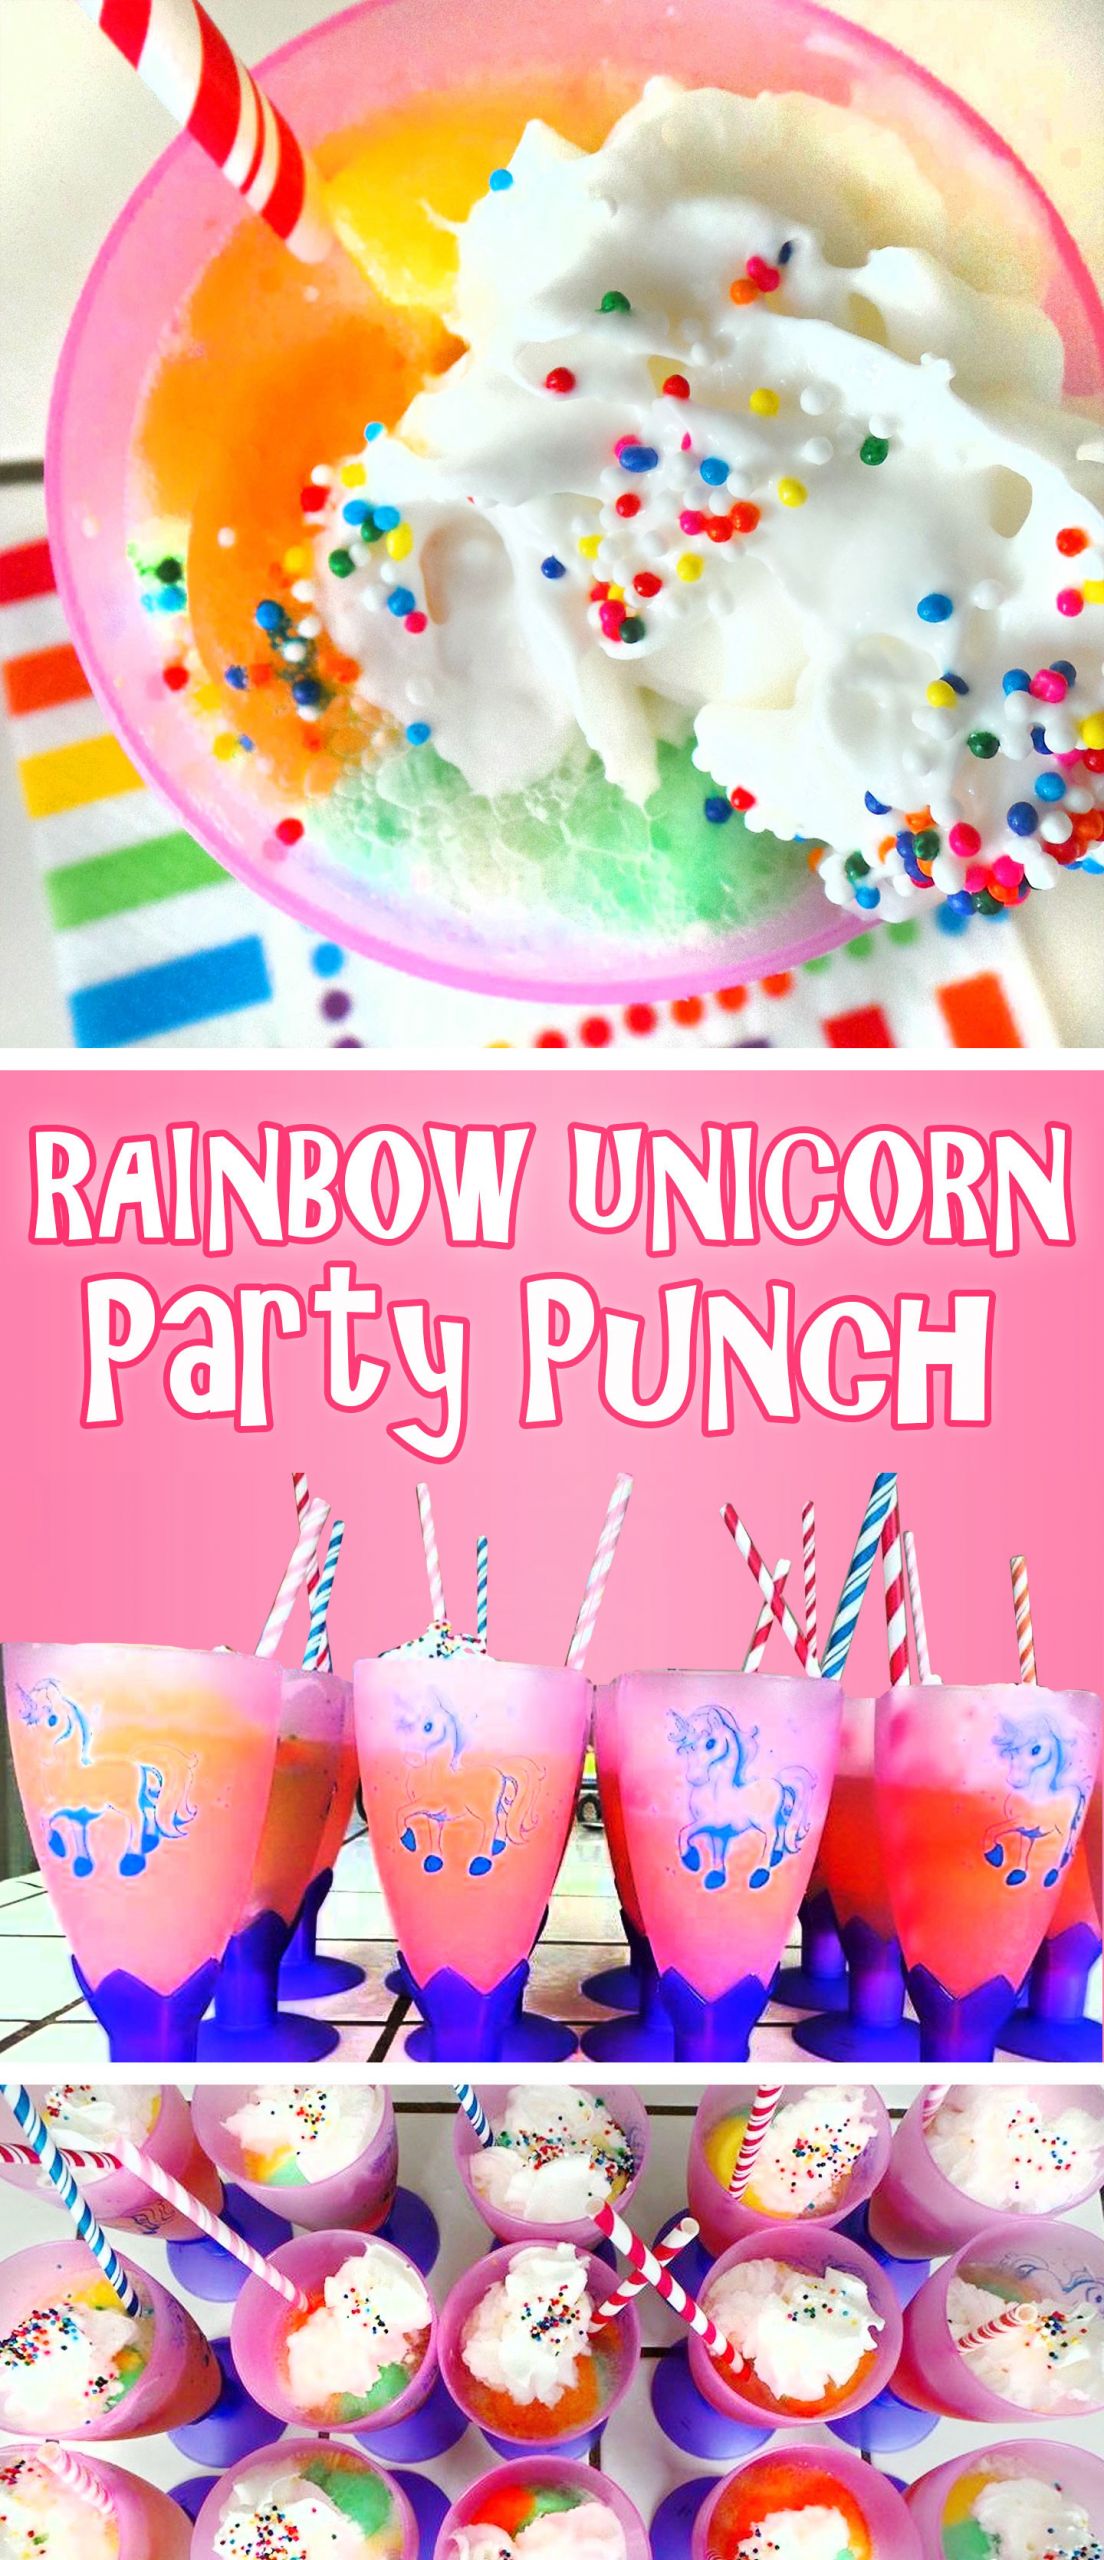 Rainbow Unicorn Birthday Party Ideas
 Rainbow Unicorn Party Punch